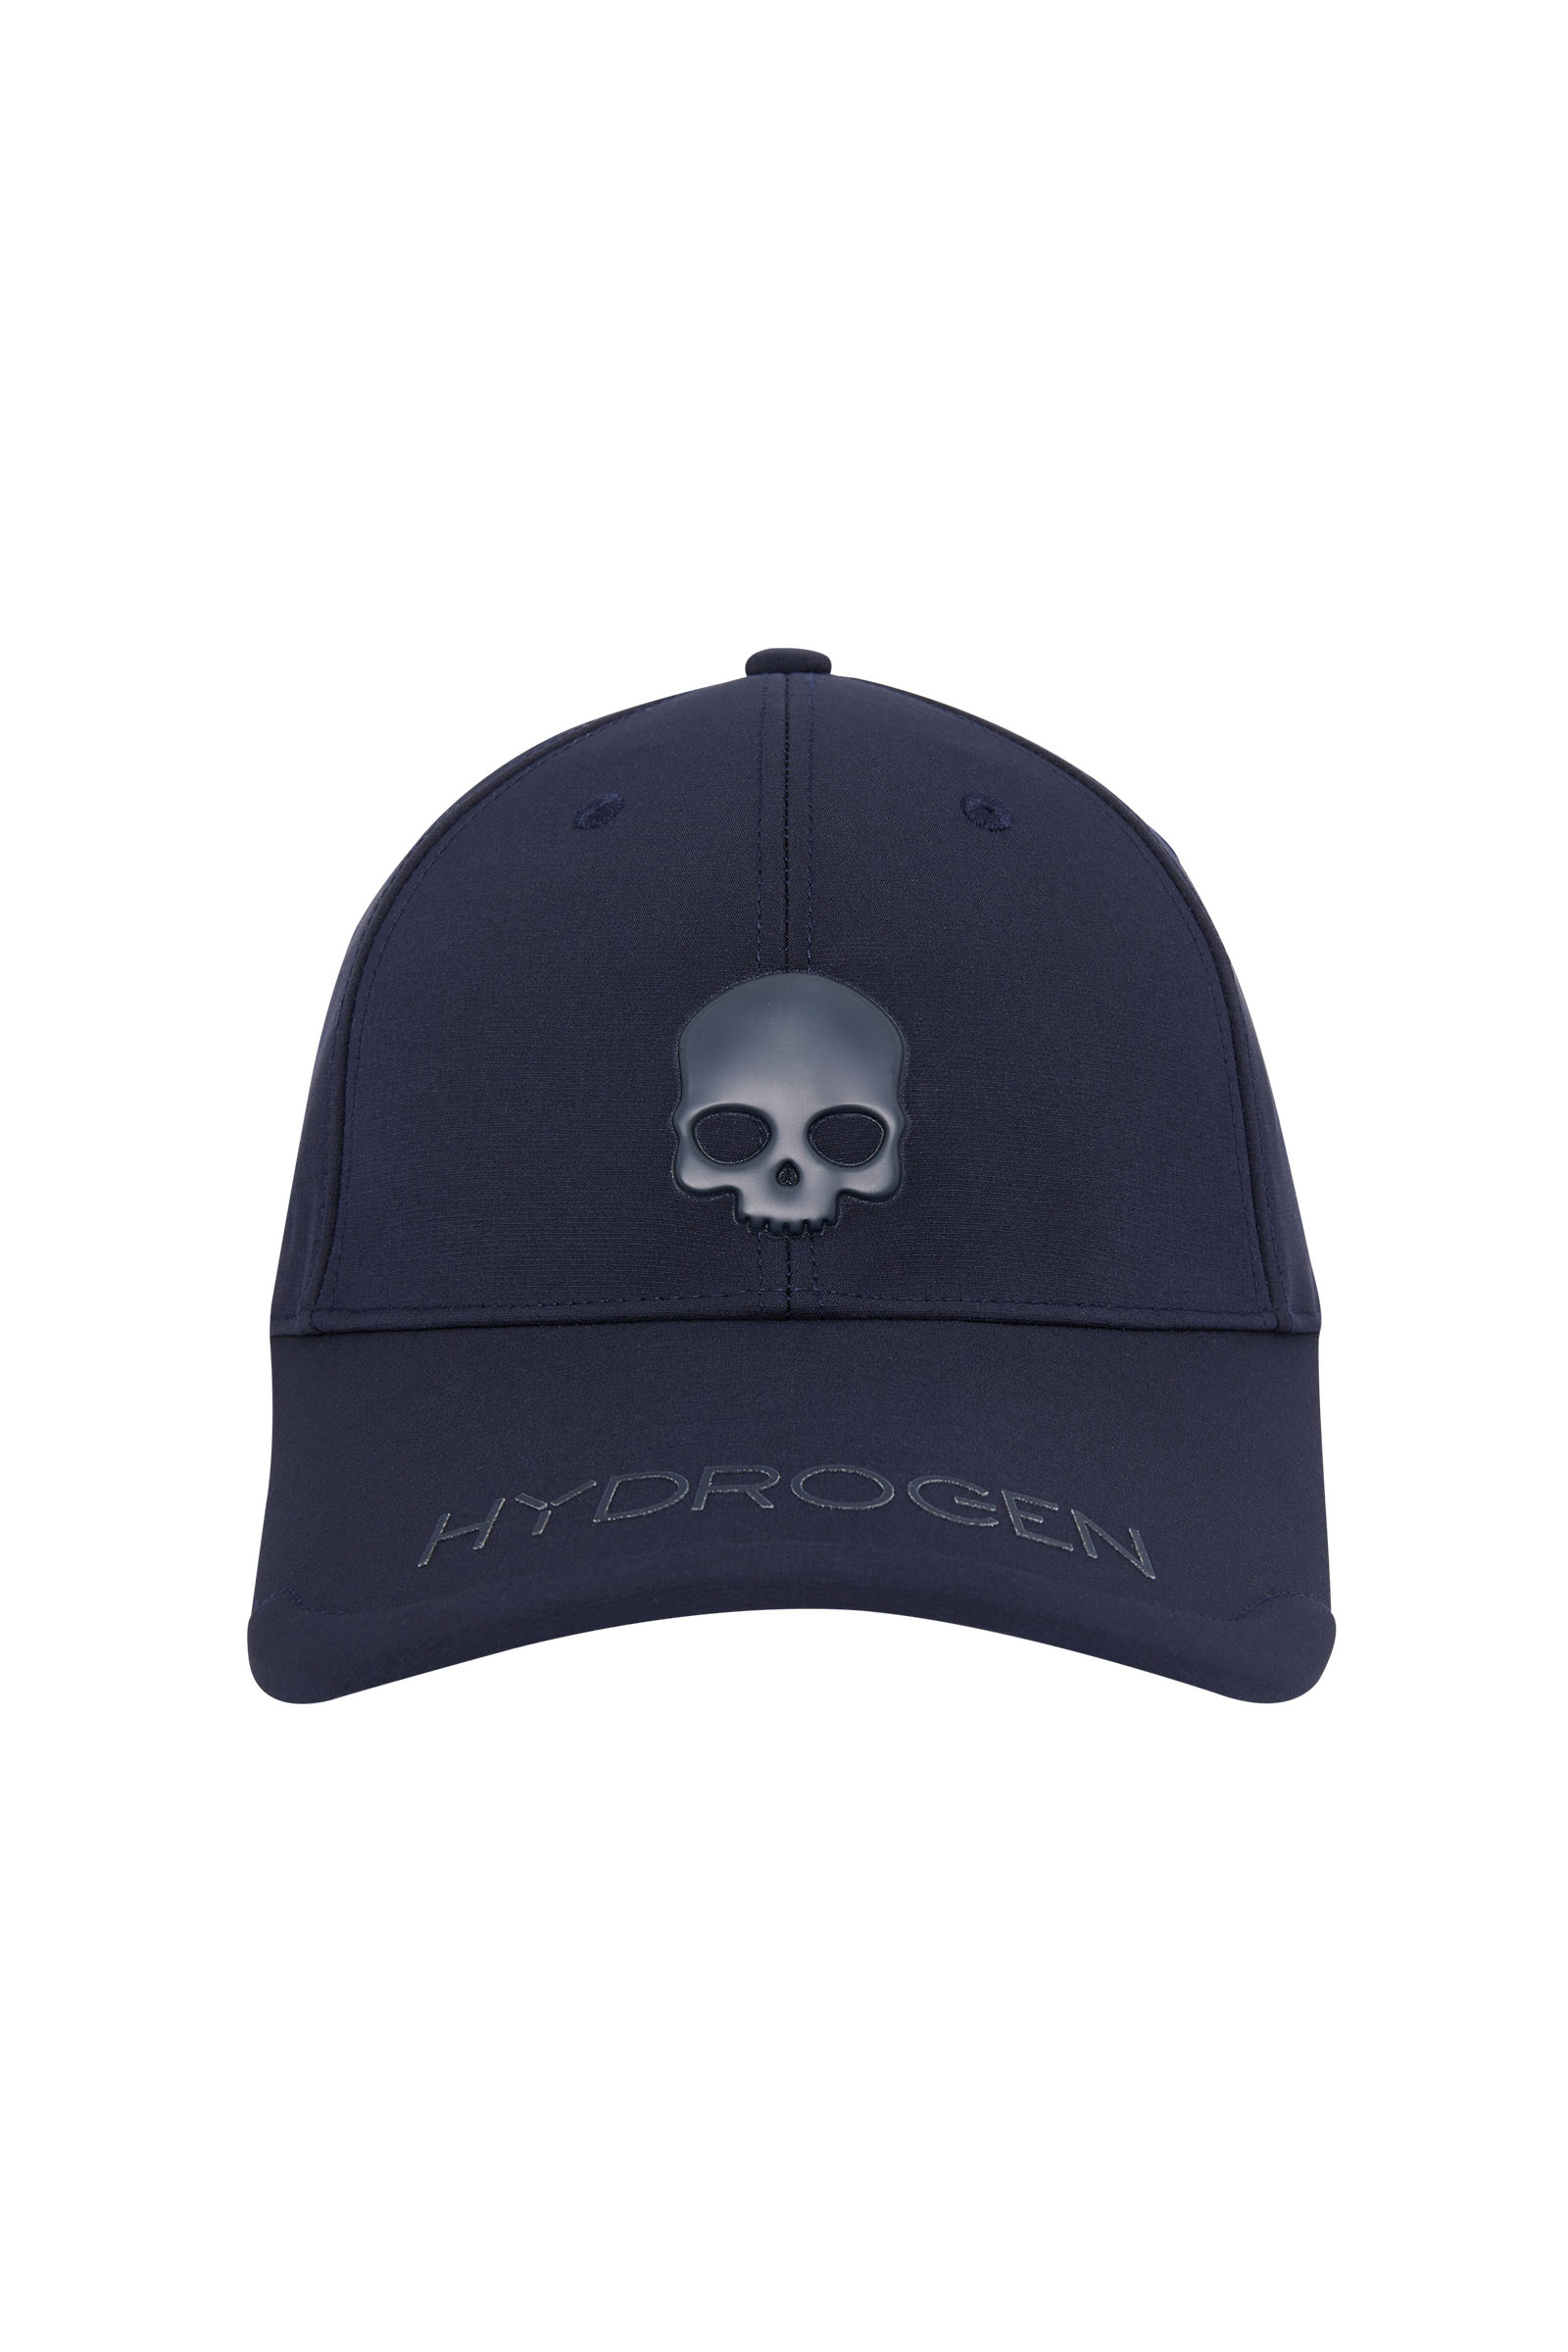 UNISEX BALL CAP - Accessories - Hydrogen - Luxury Sportwear